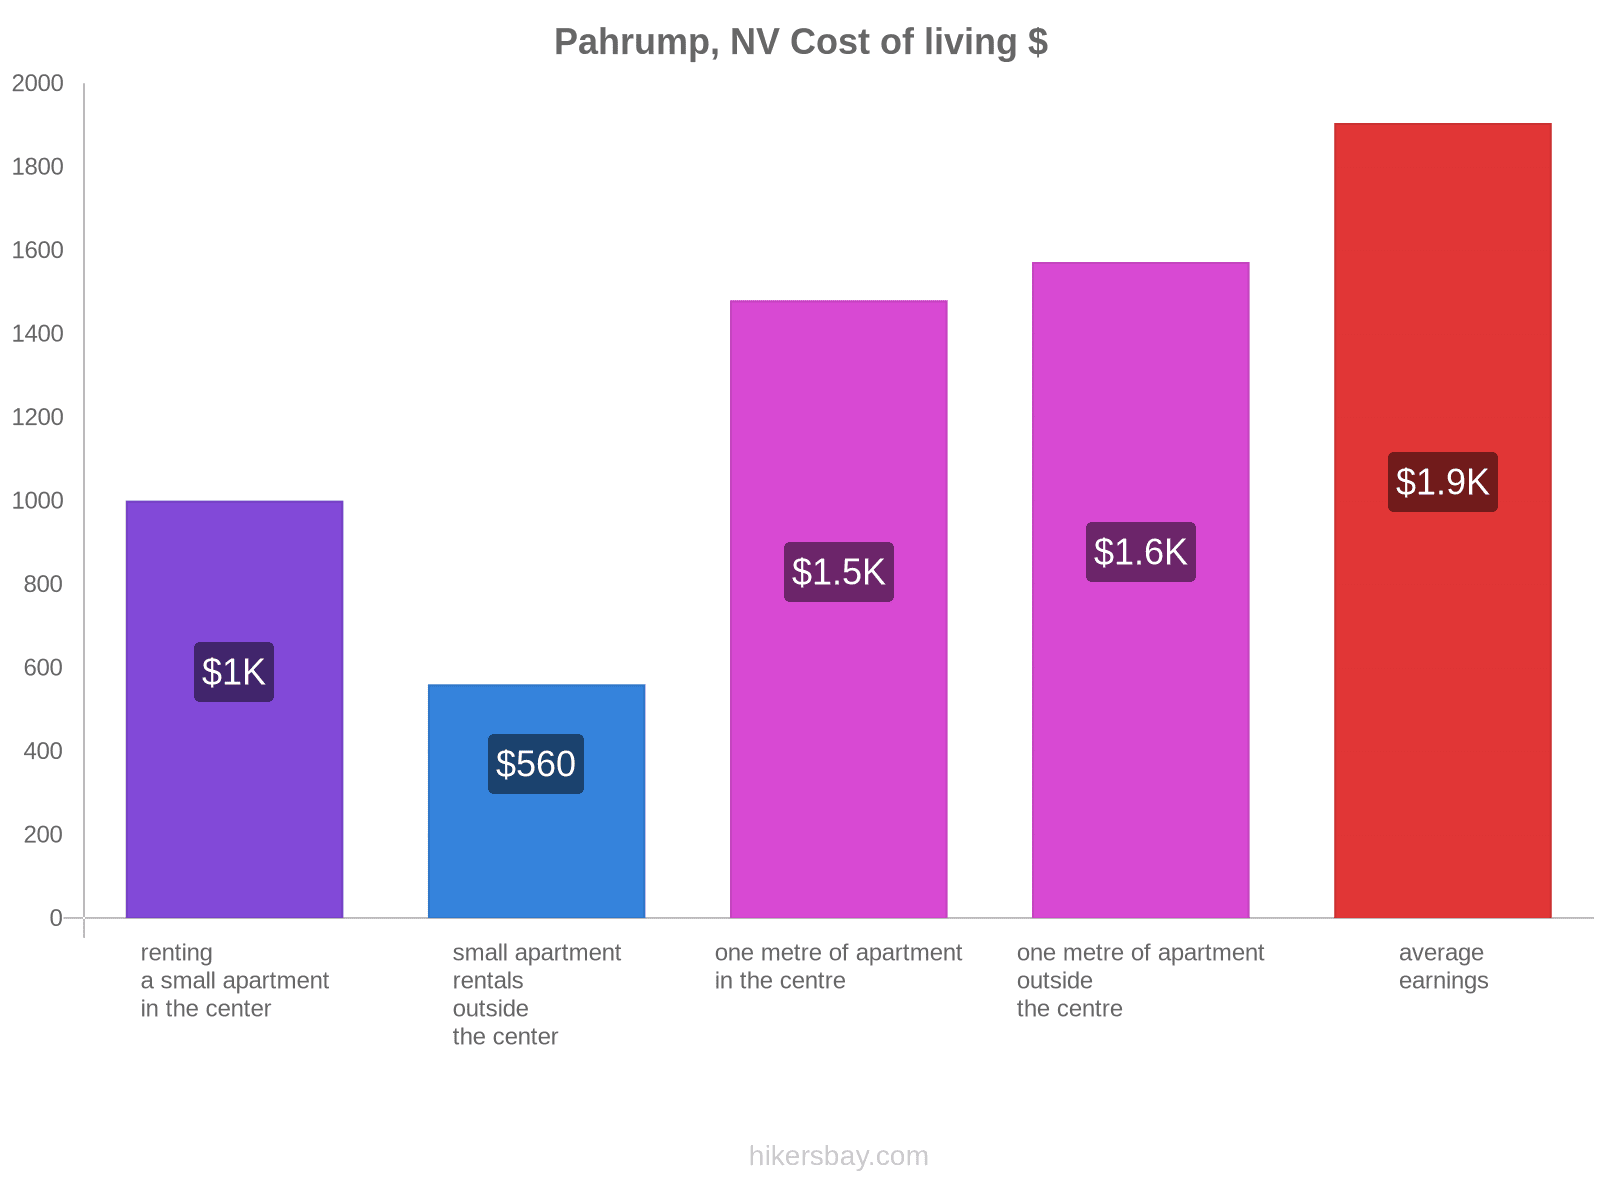 Pahrump, NV cost of living hikersbay.com